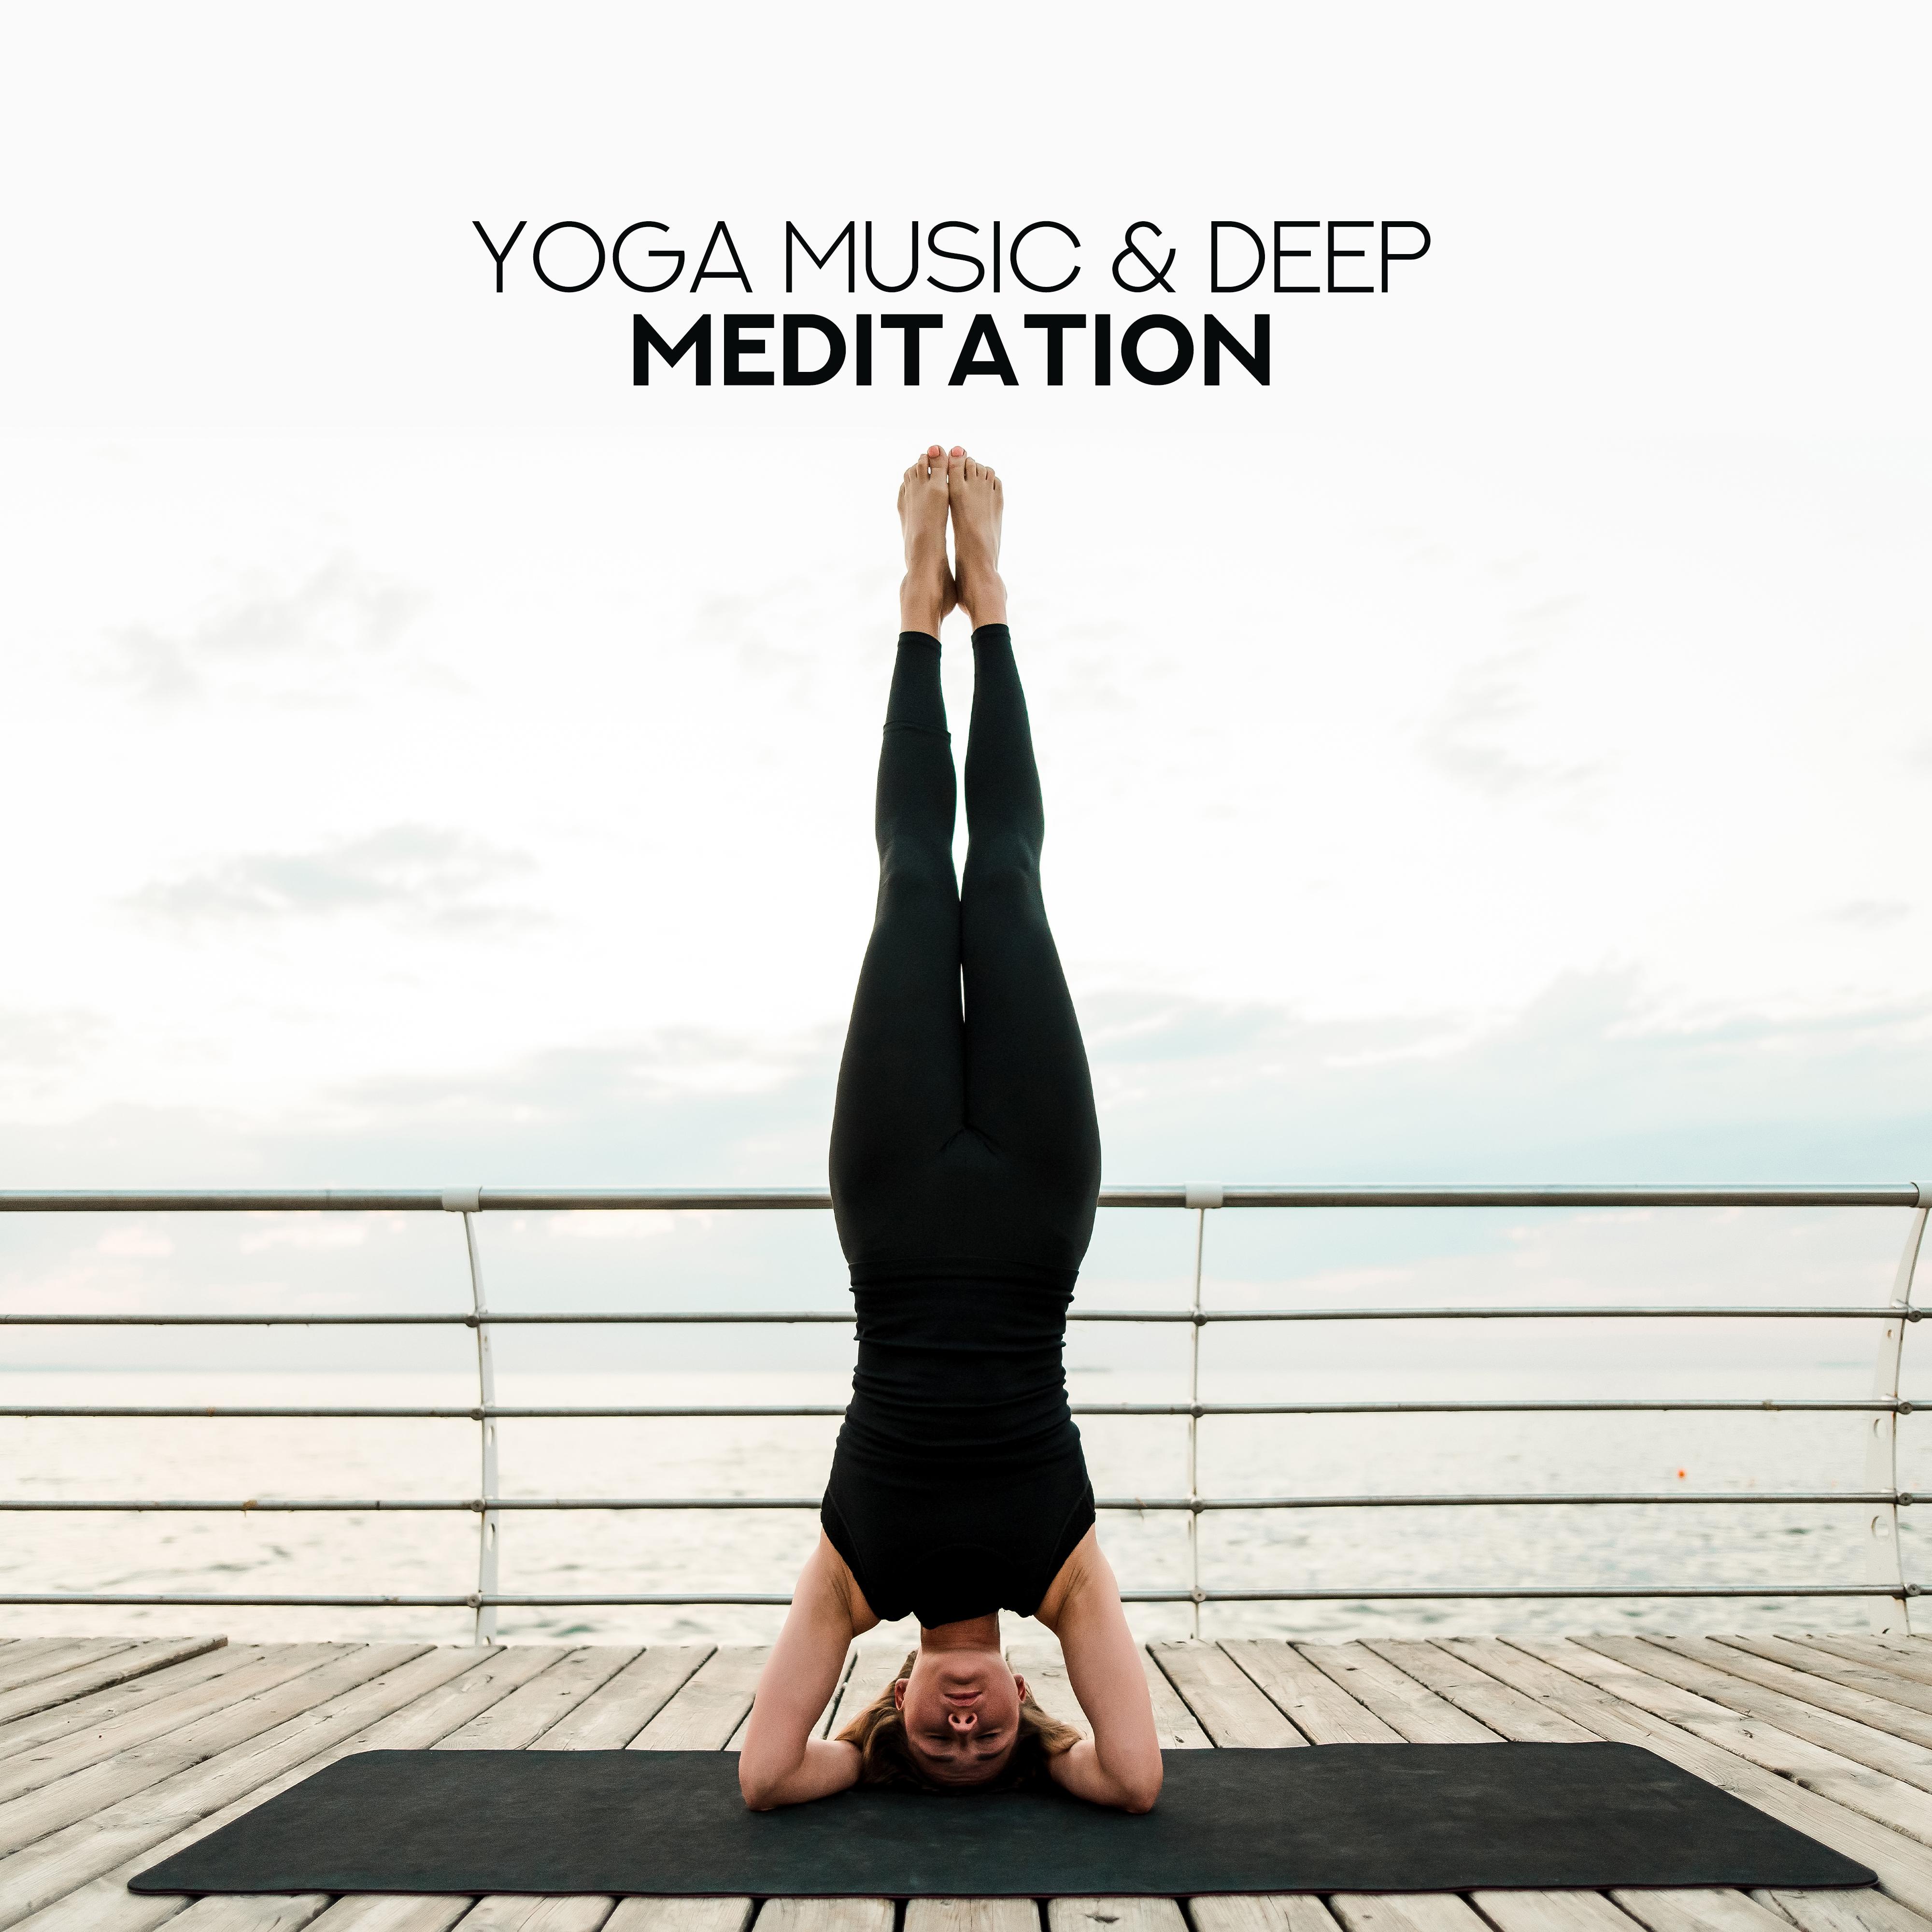 Yoga Music & Deep Meditation: Meditation Music Zone, Healing Music to Calm Down, Inner Balance, Zen, Lounge